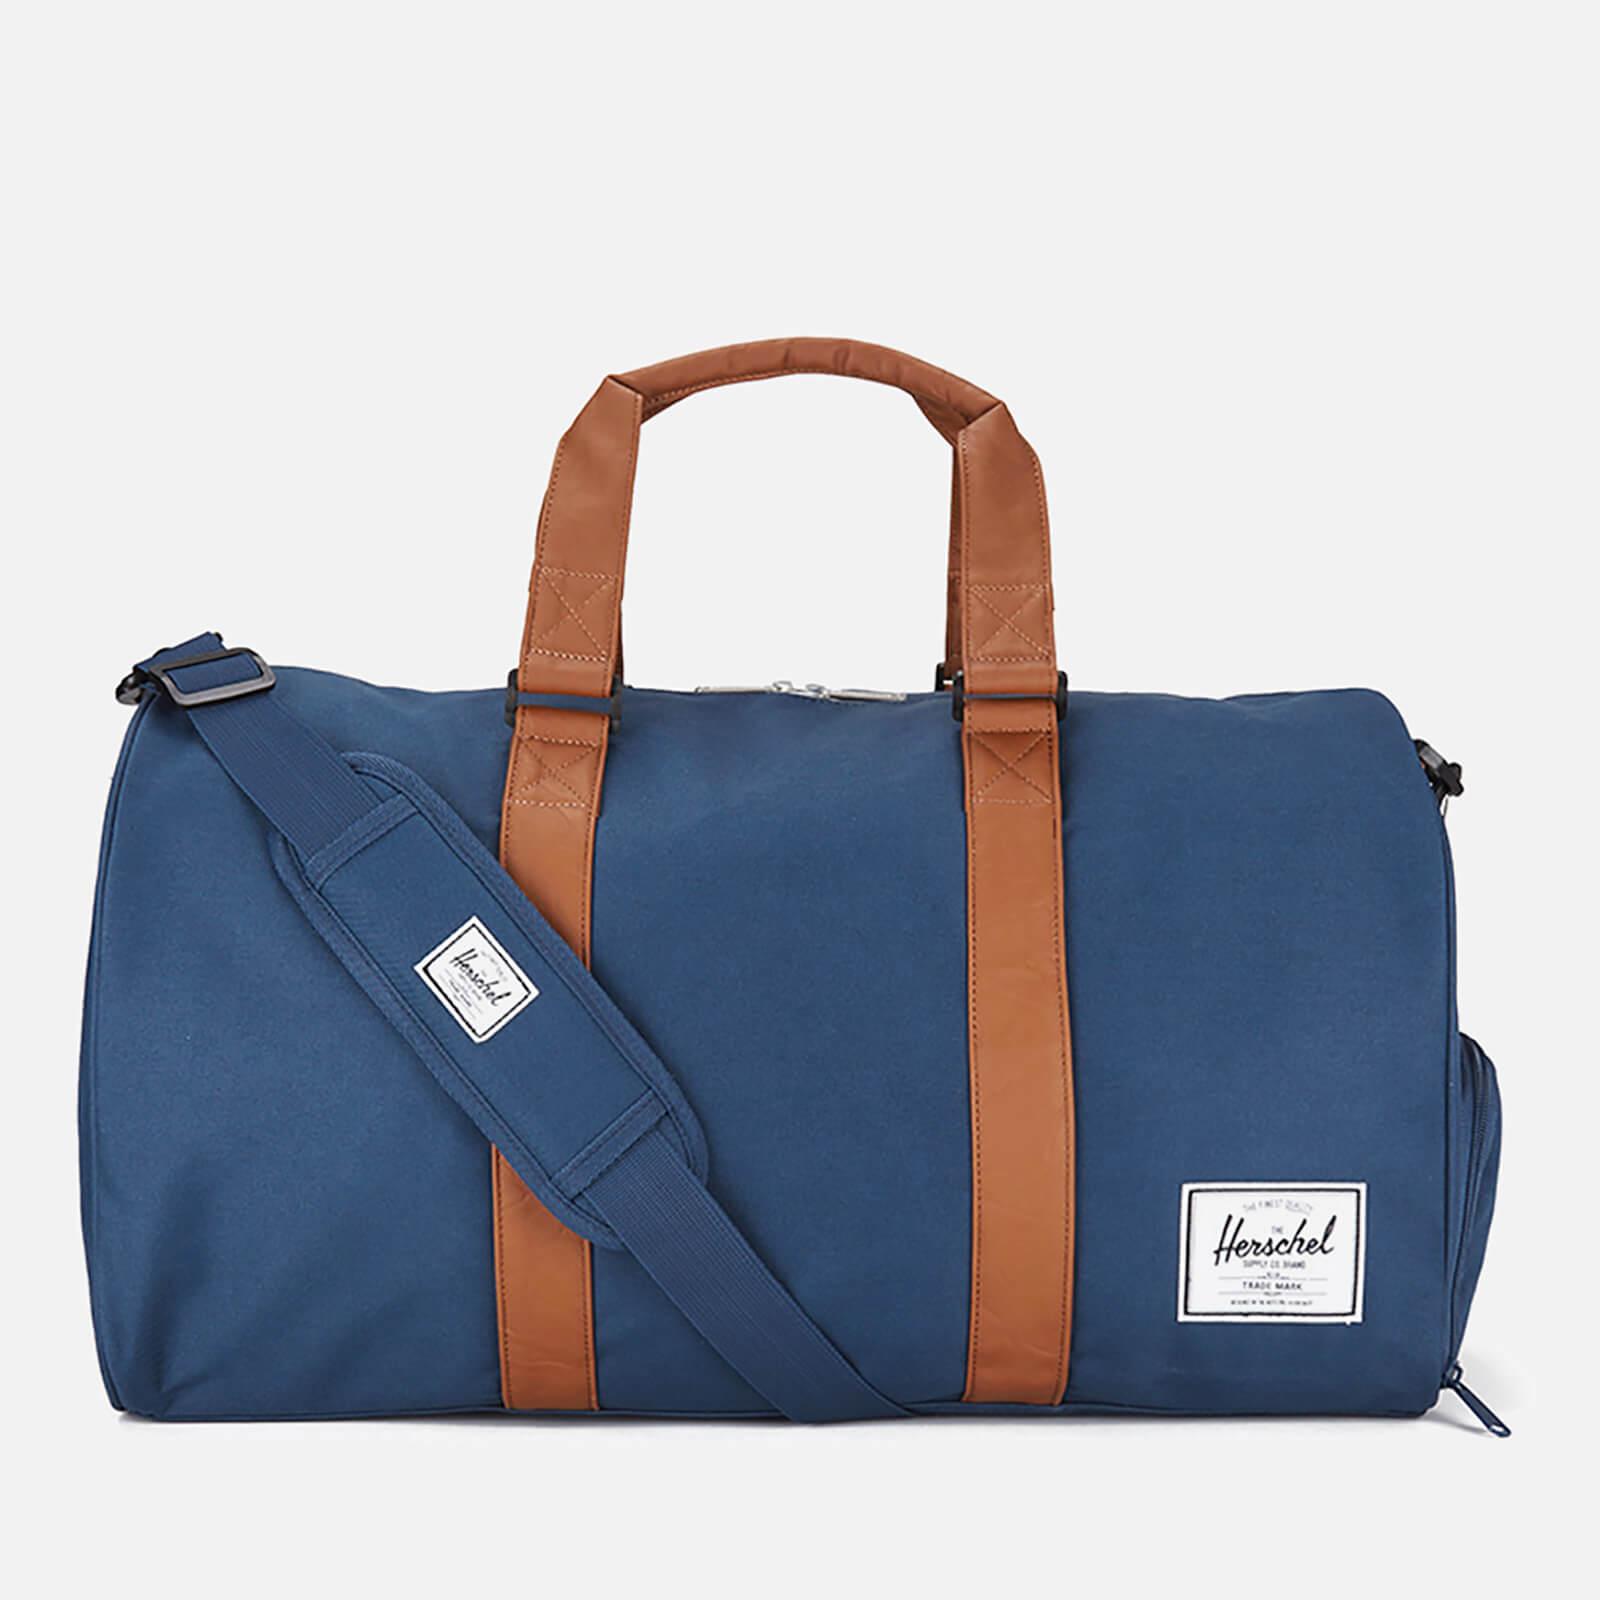 Lyst - Herschel Supply Co. Novel Duffle Bag in Blue for Men - Save 35%